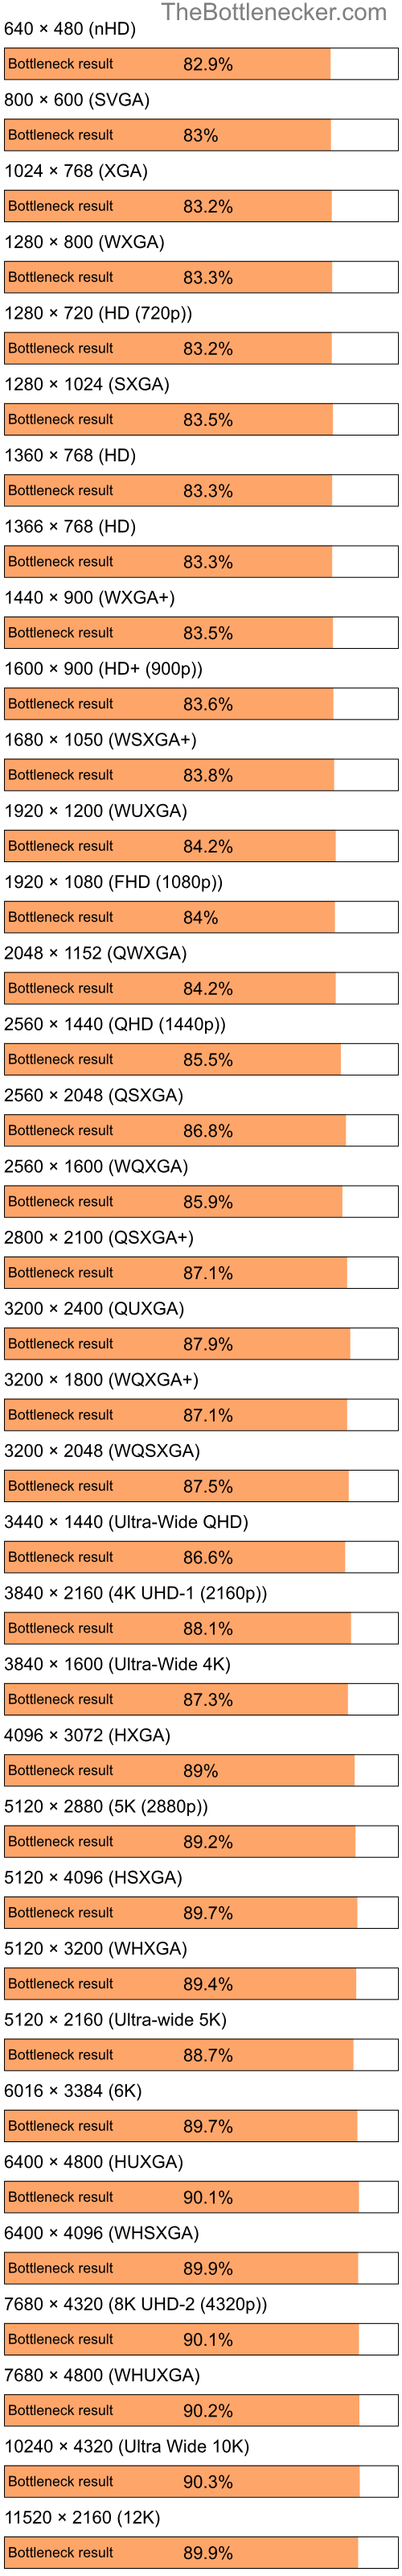 Bottleneck results by resolution for Intel Celeron and NVIDIA GeForce 6100 nForce 405 in Graphic Card Intense Tasks